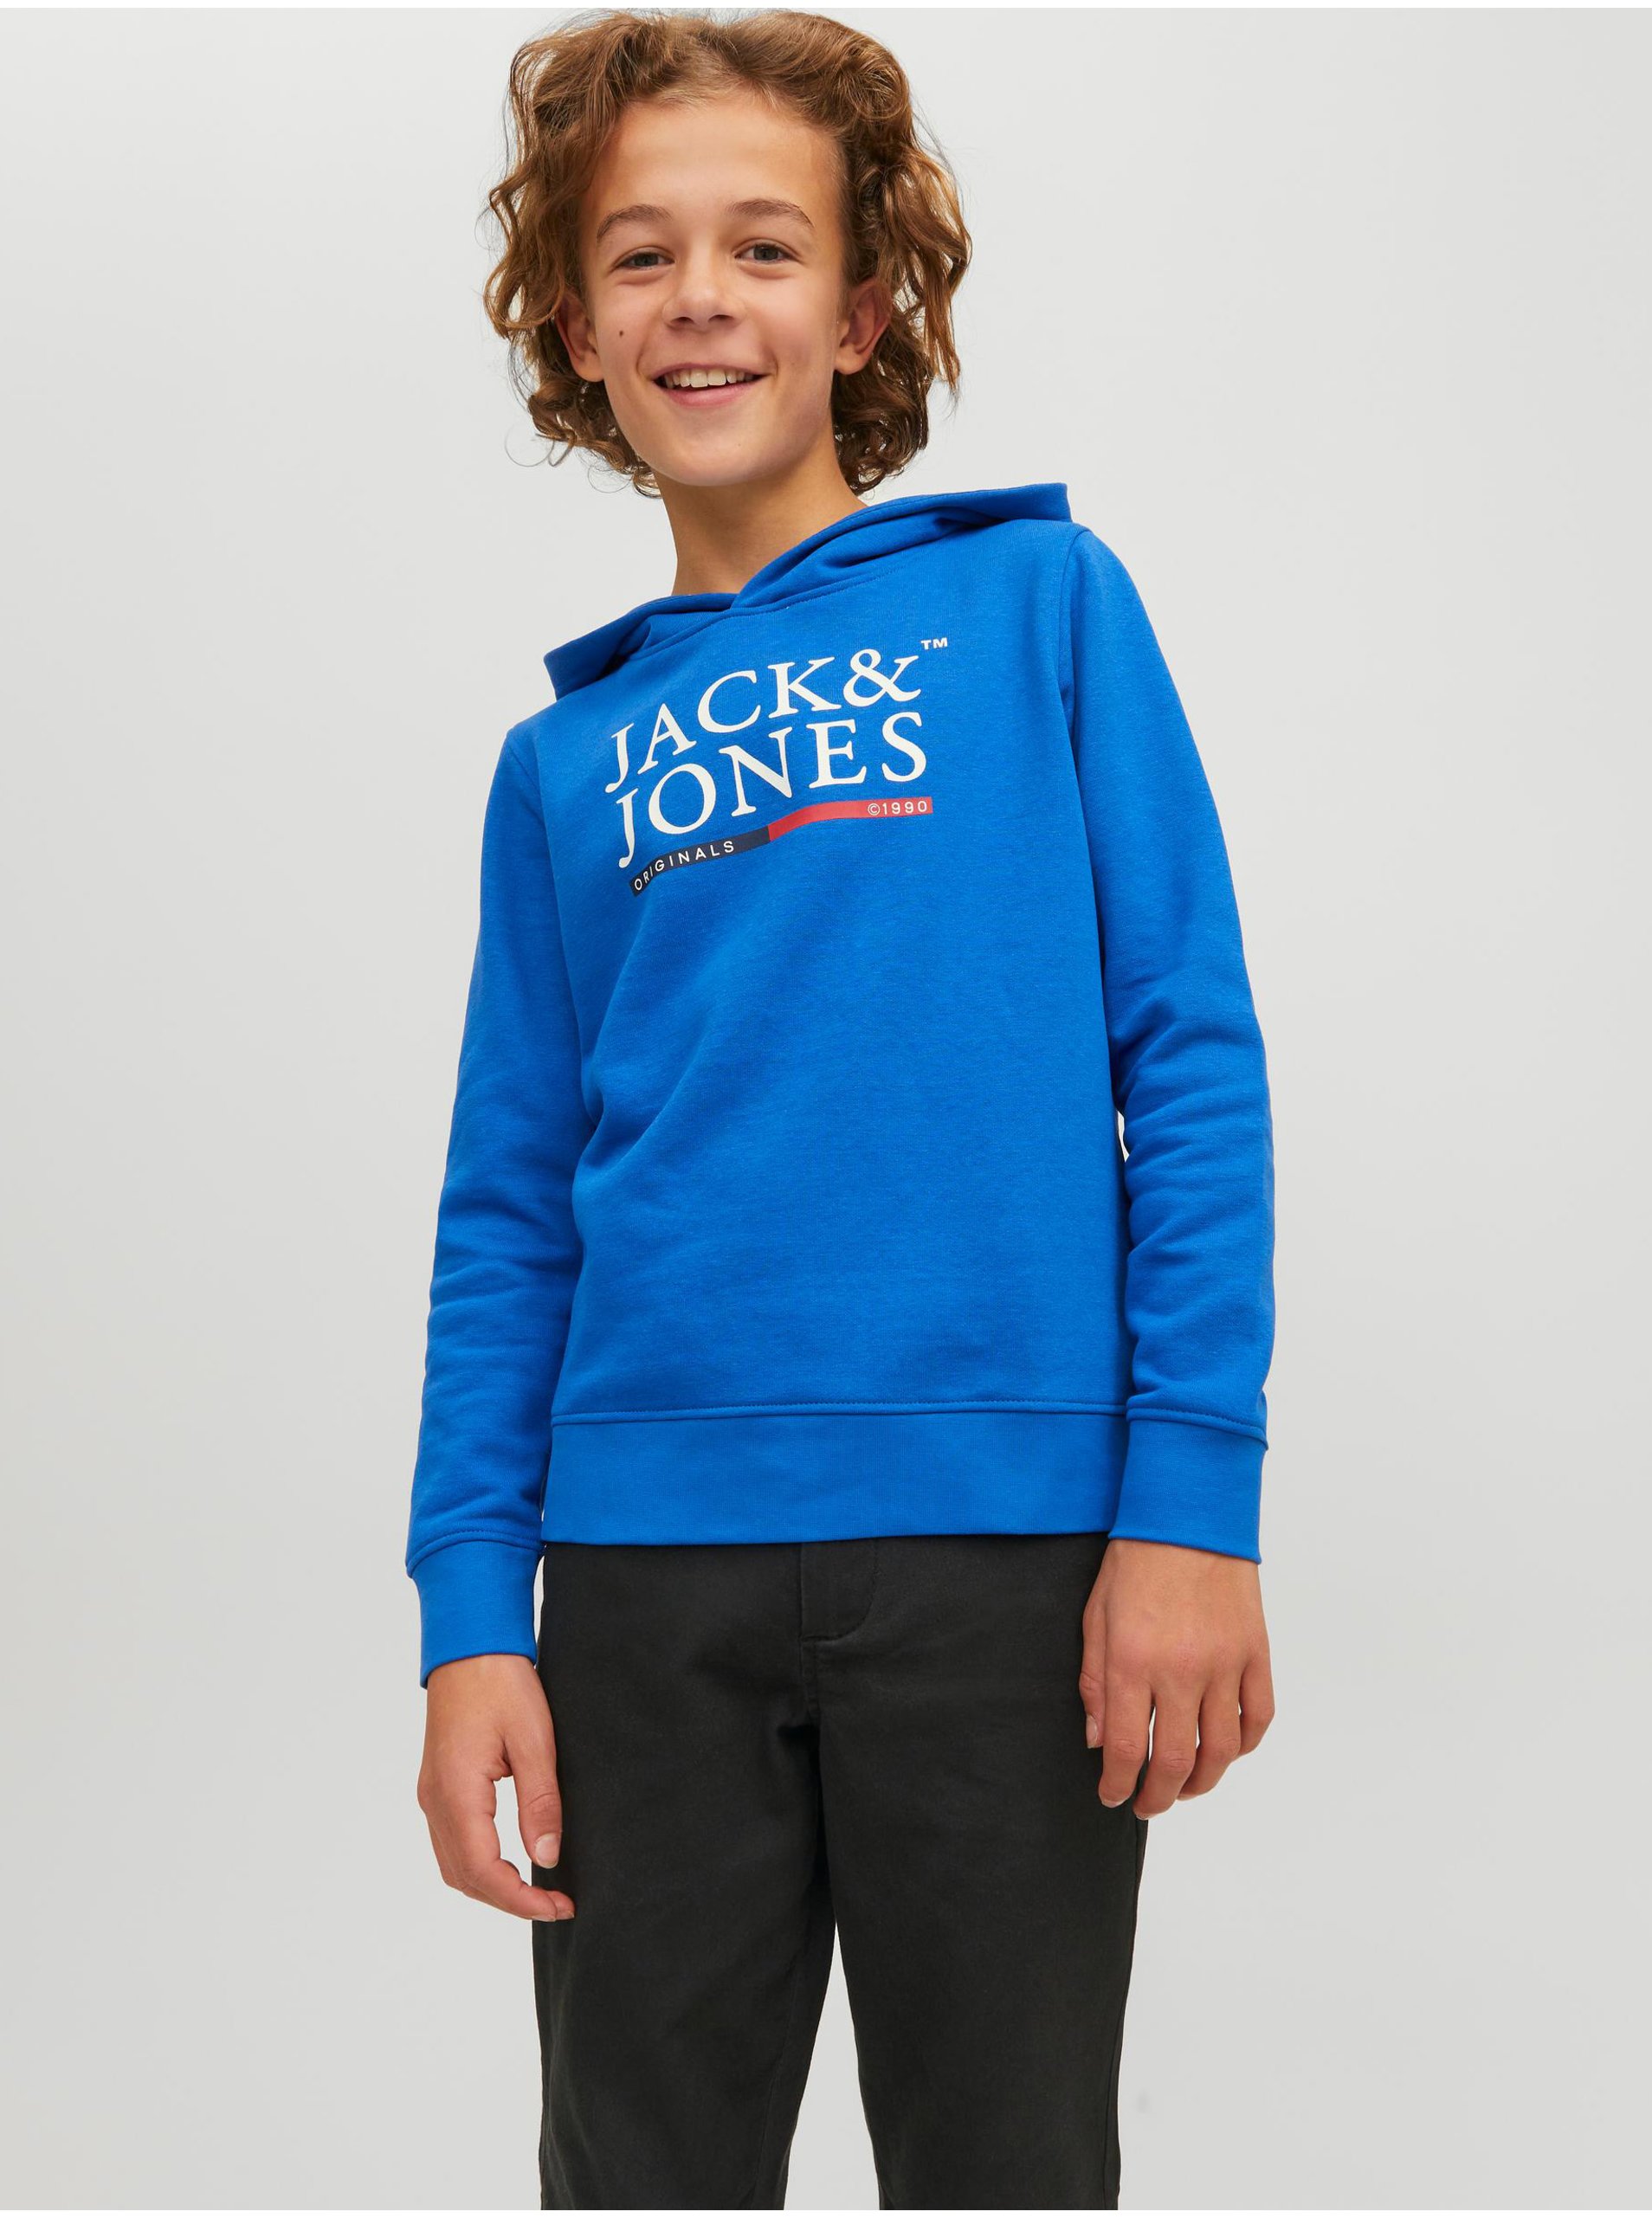 Lacno Jack & Jones - modrá